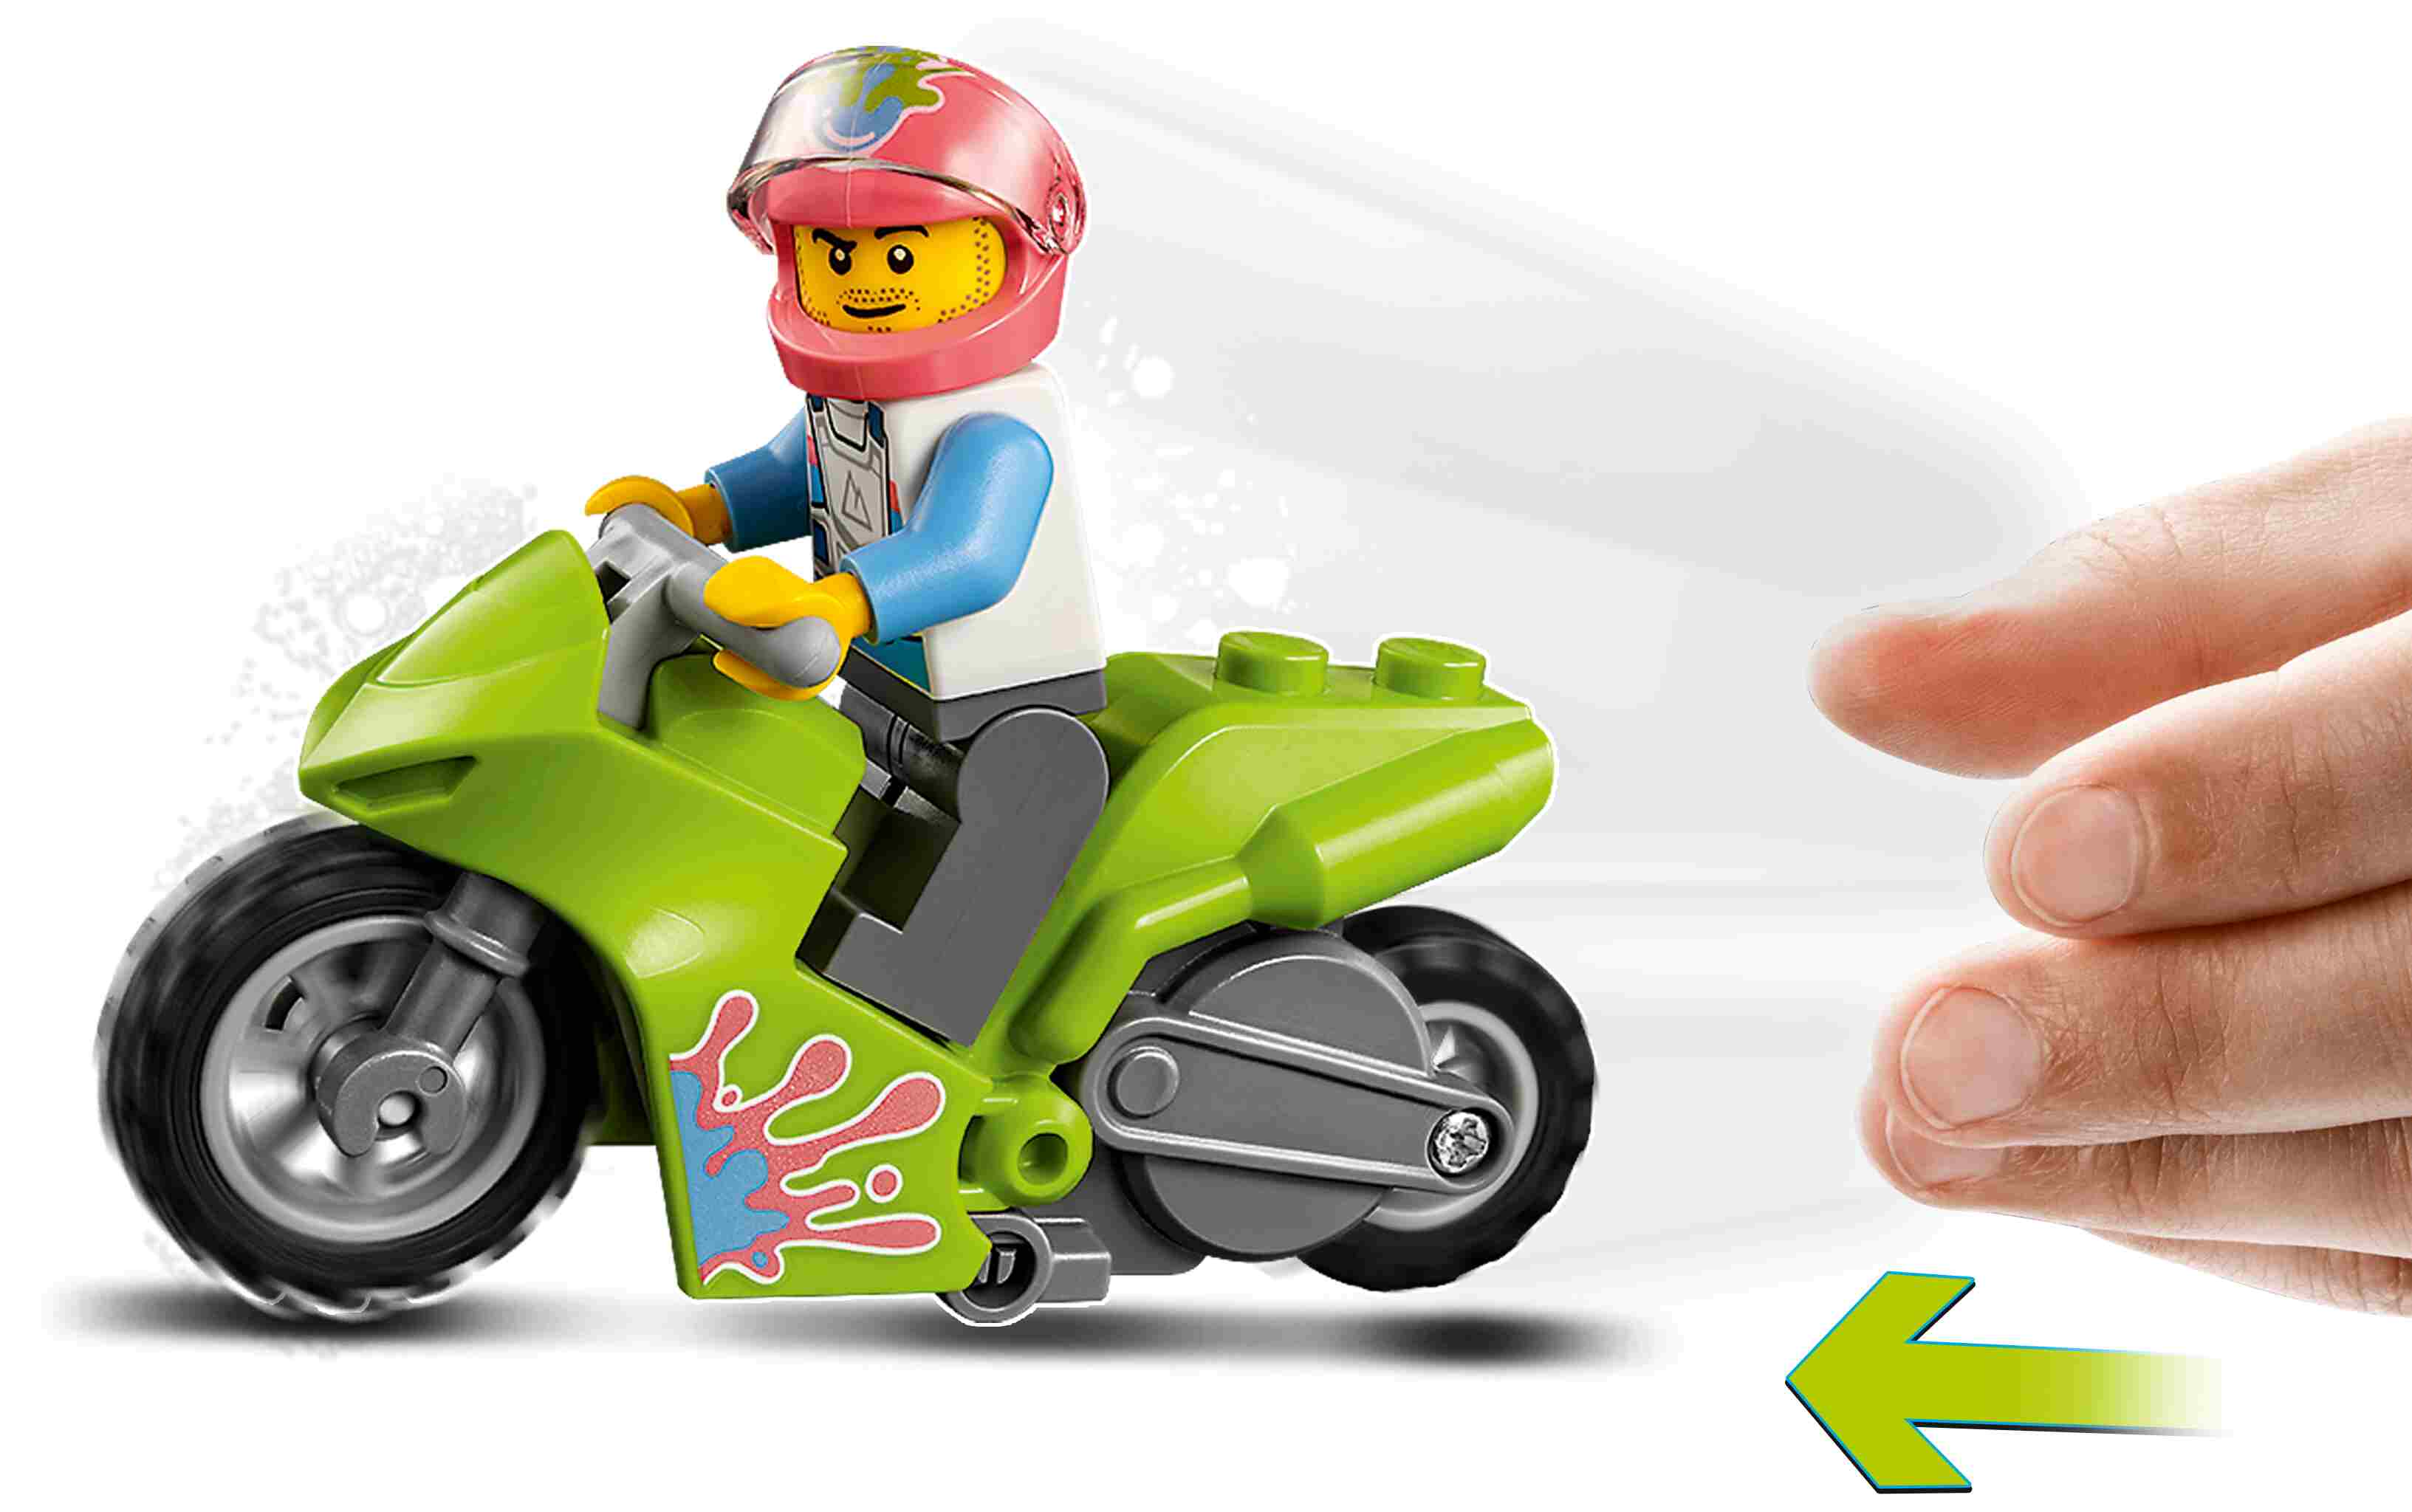 LEGO 60295 City Stuntz Stuntshow-Arena, Motorrad mit Schwungrad, 6 Minifiguren